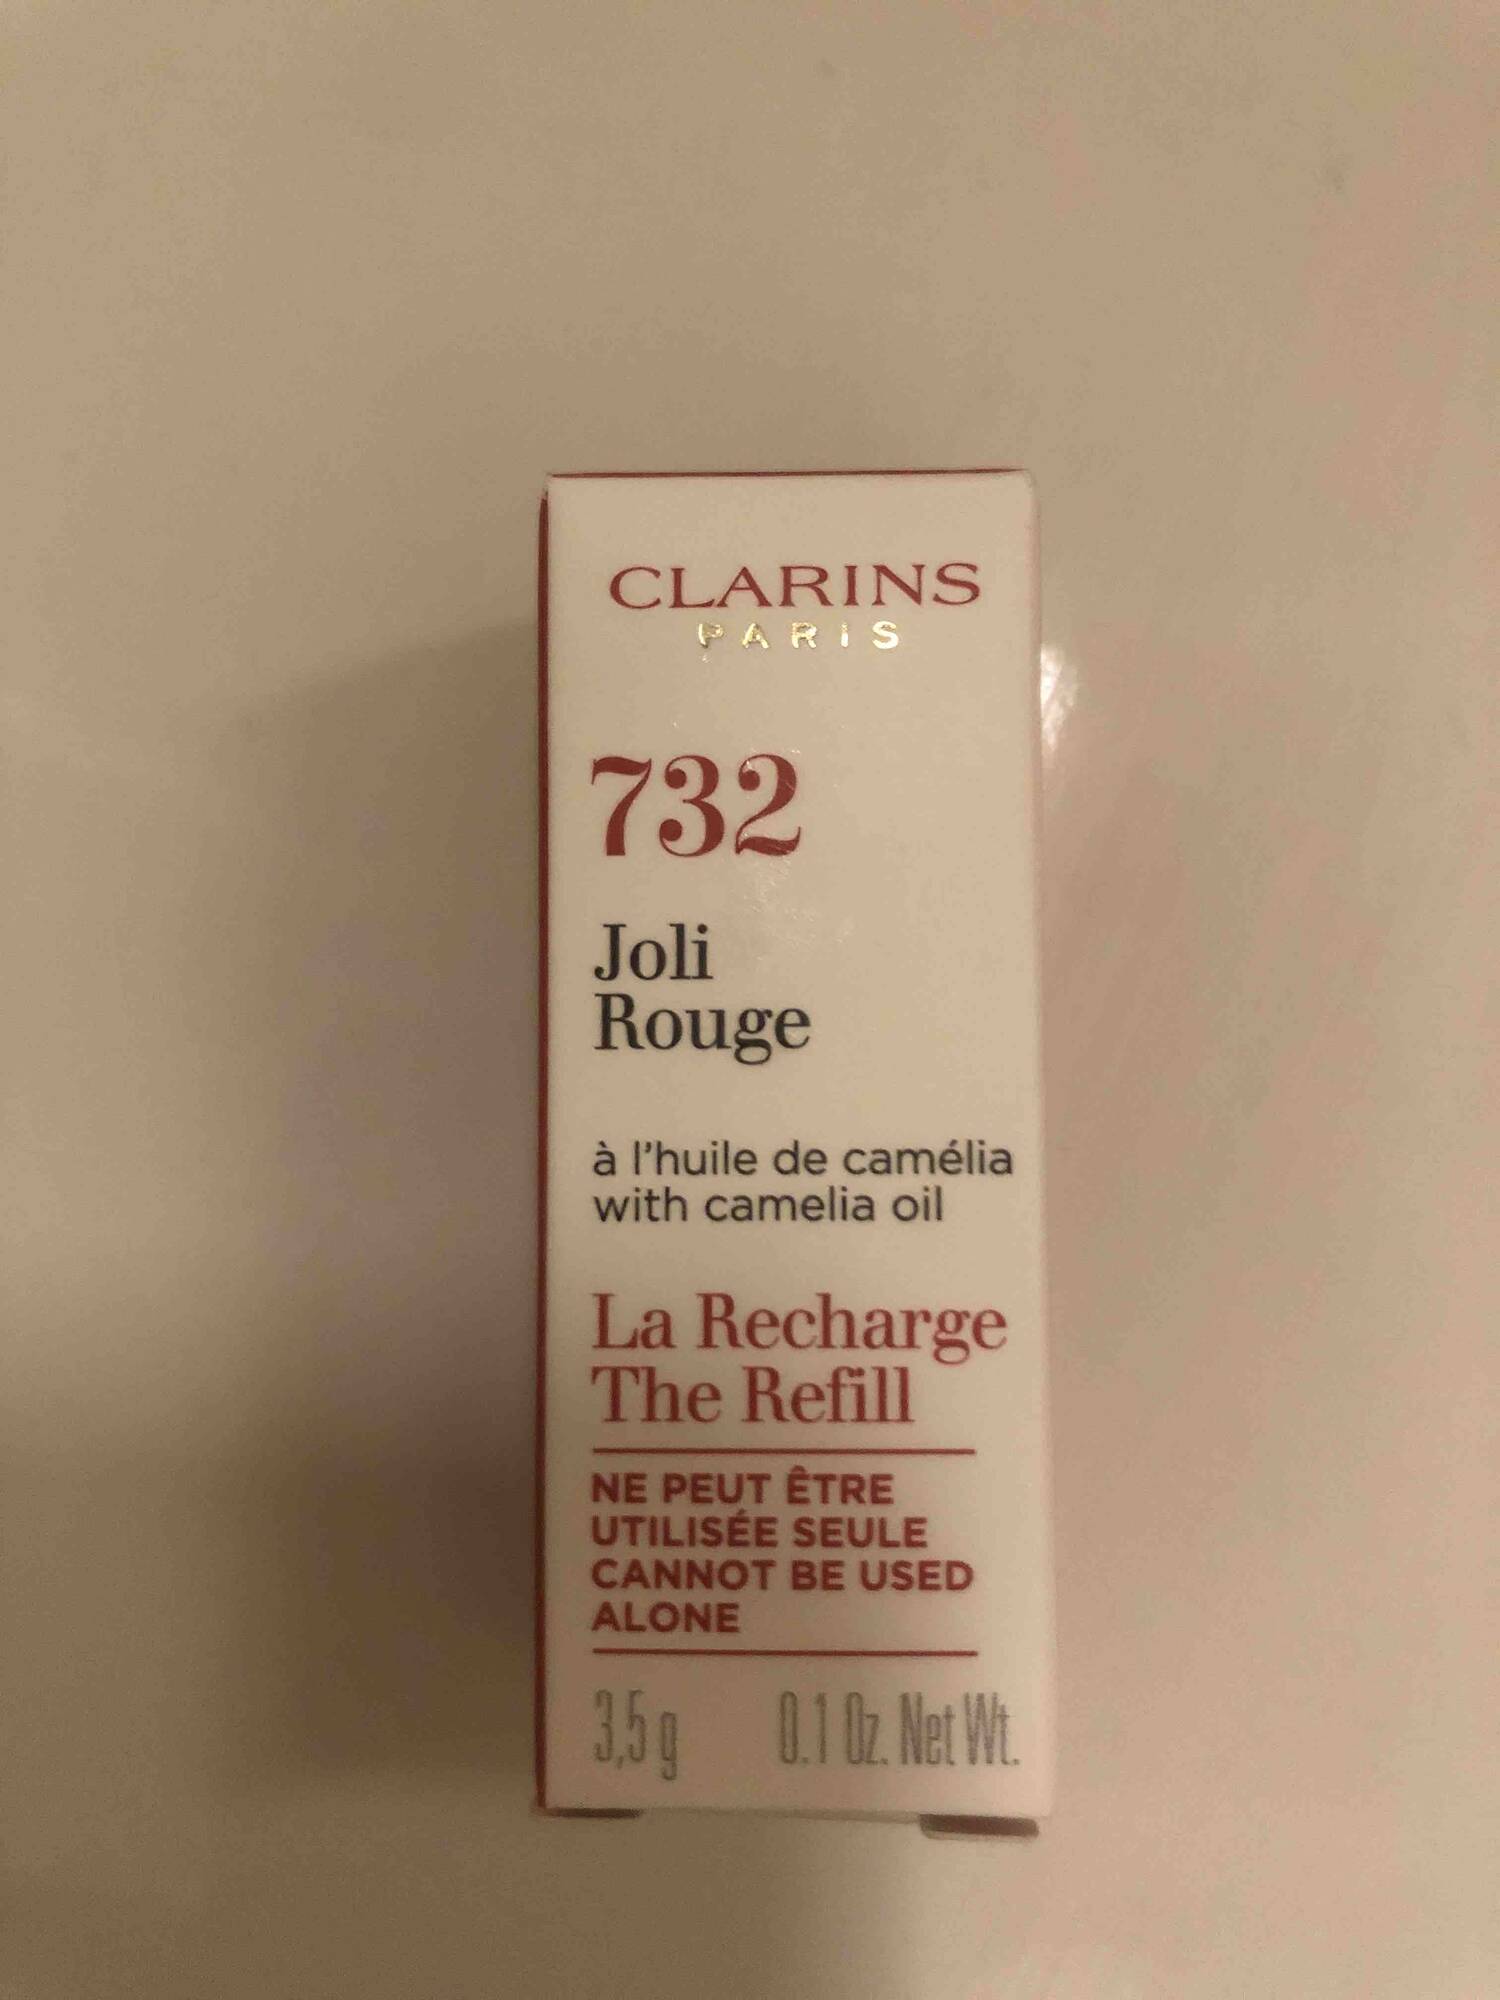 CLARINS - 732 joli rouge 